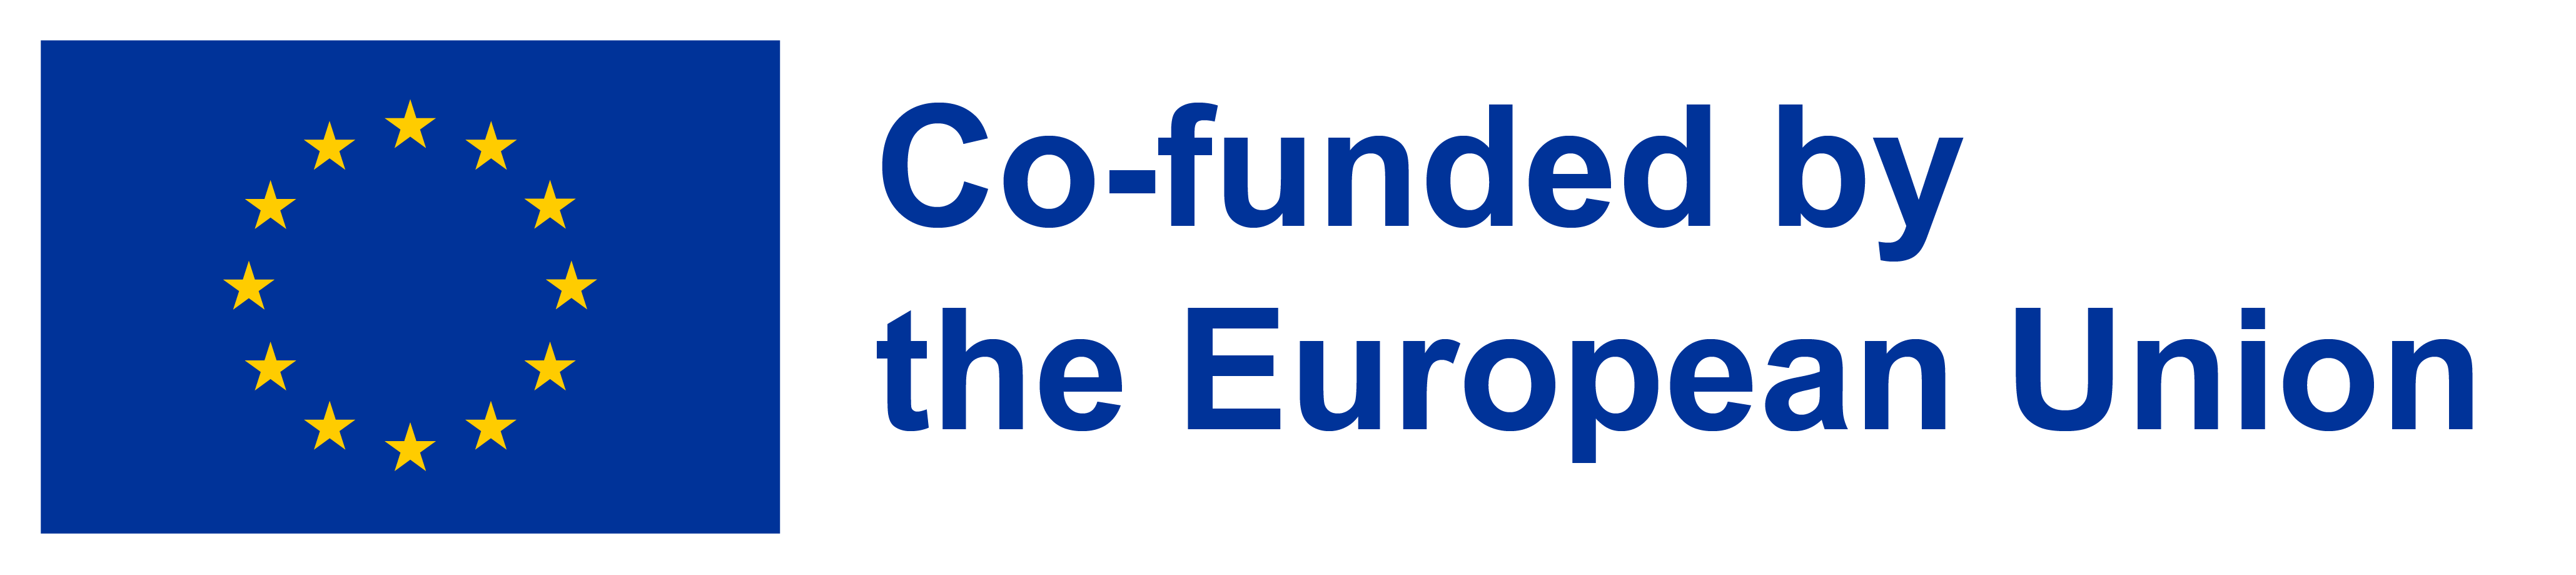 EU-logga med textet Co-funded by the European Union